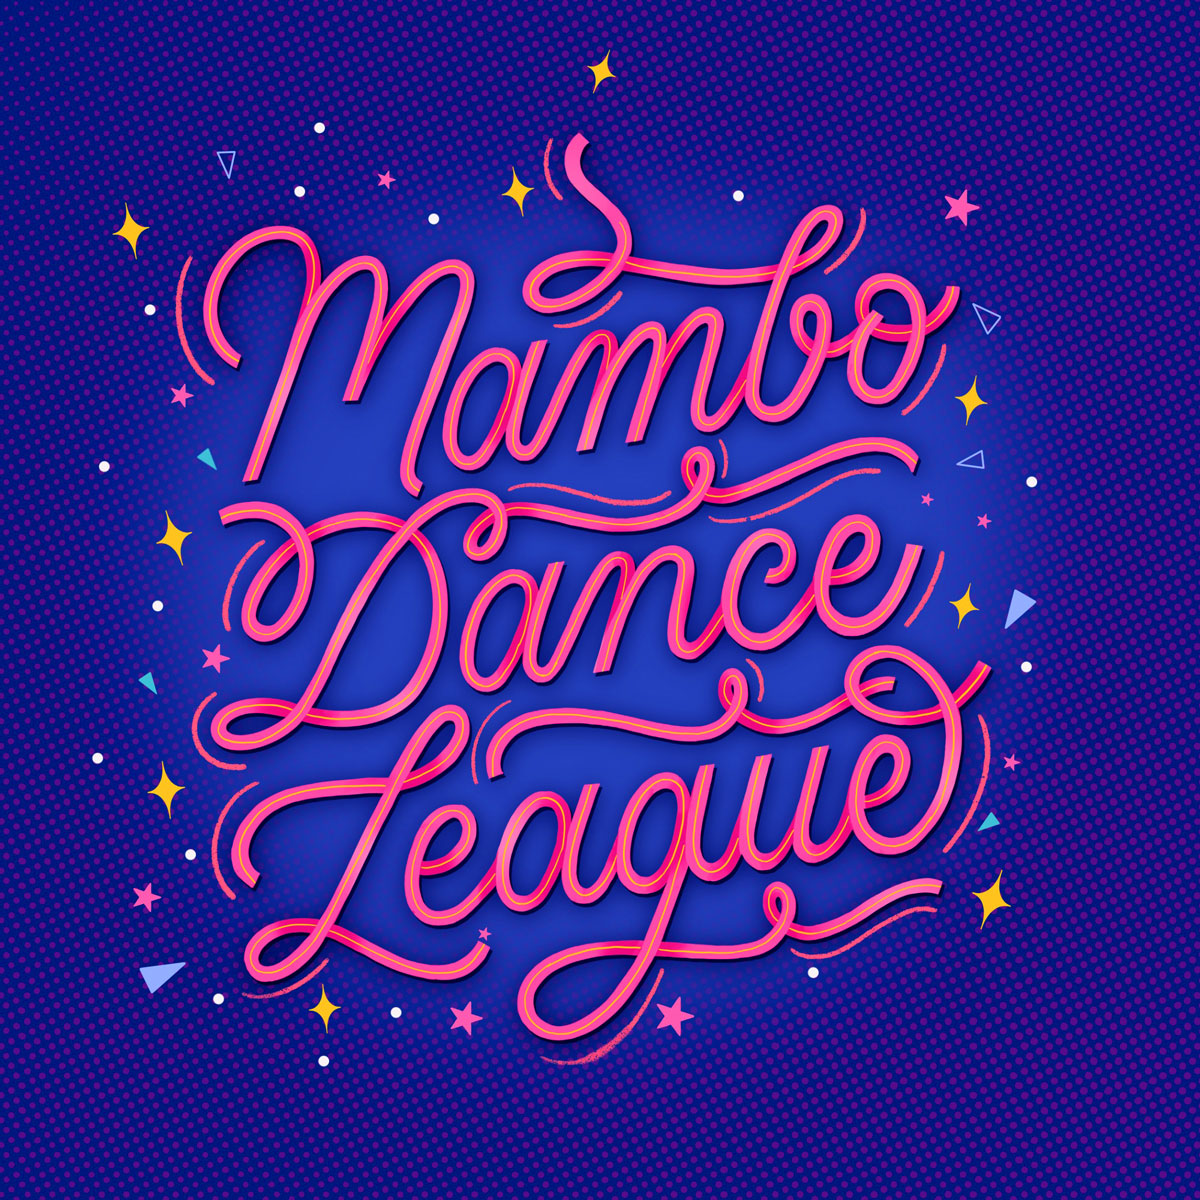 CalliLetters-Monolinear-Handlettering-Mambo-Dance-League-Sandra-Brezina